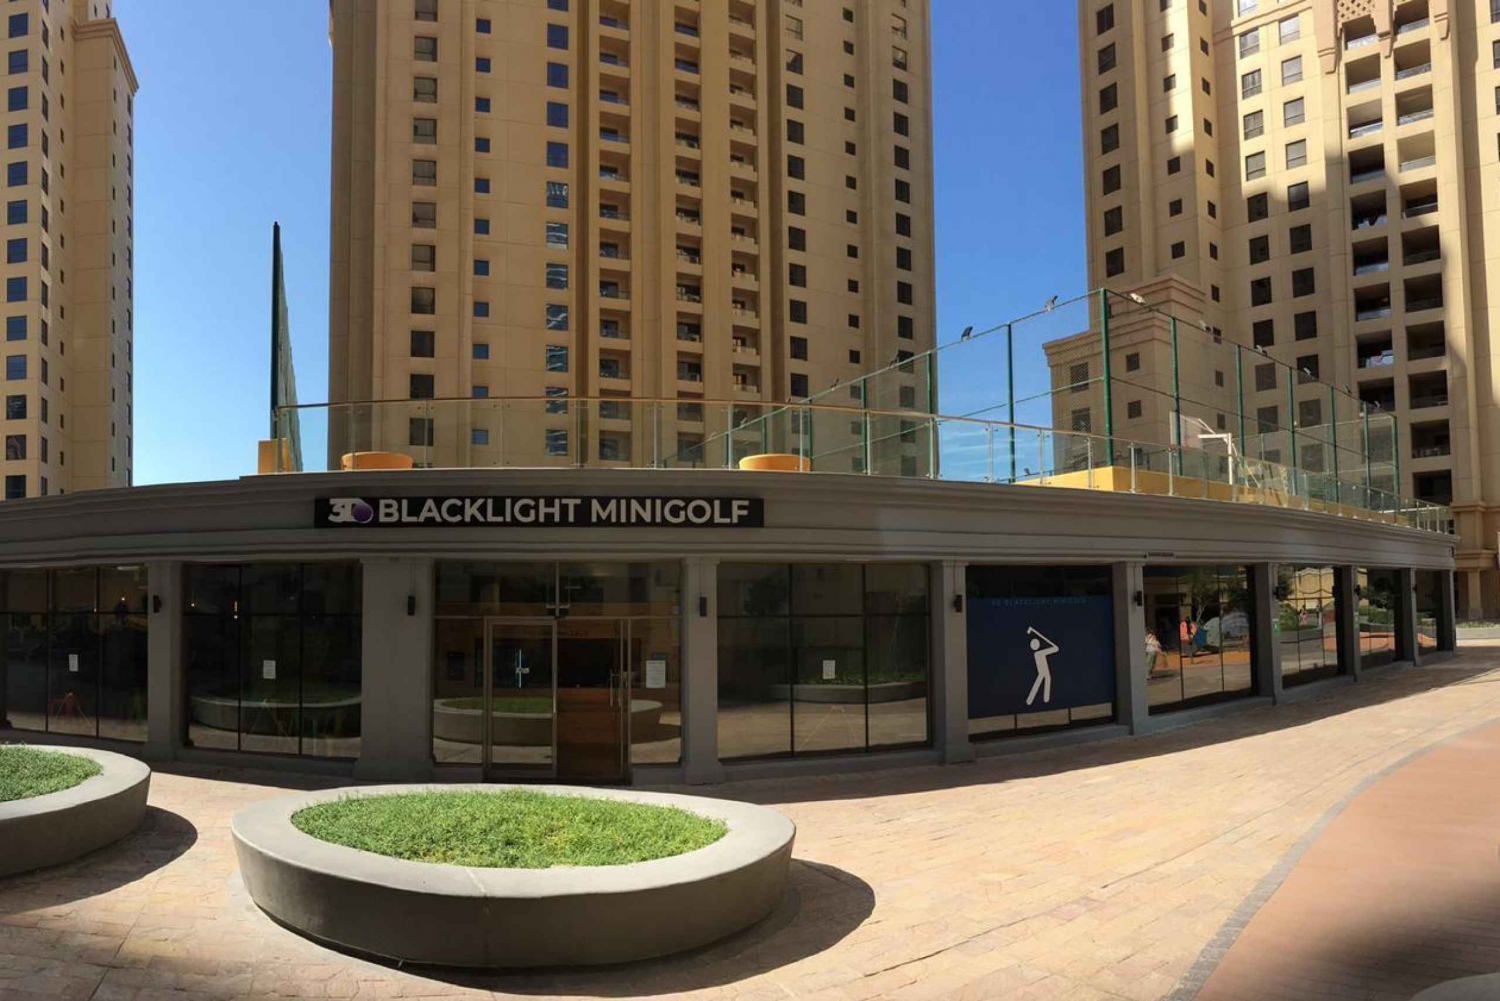 Dubai: 3D Glow-in-the-Dark Blacklight Mini Golf Experience